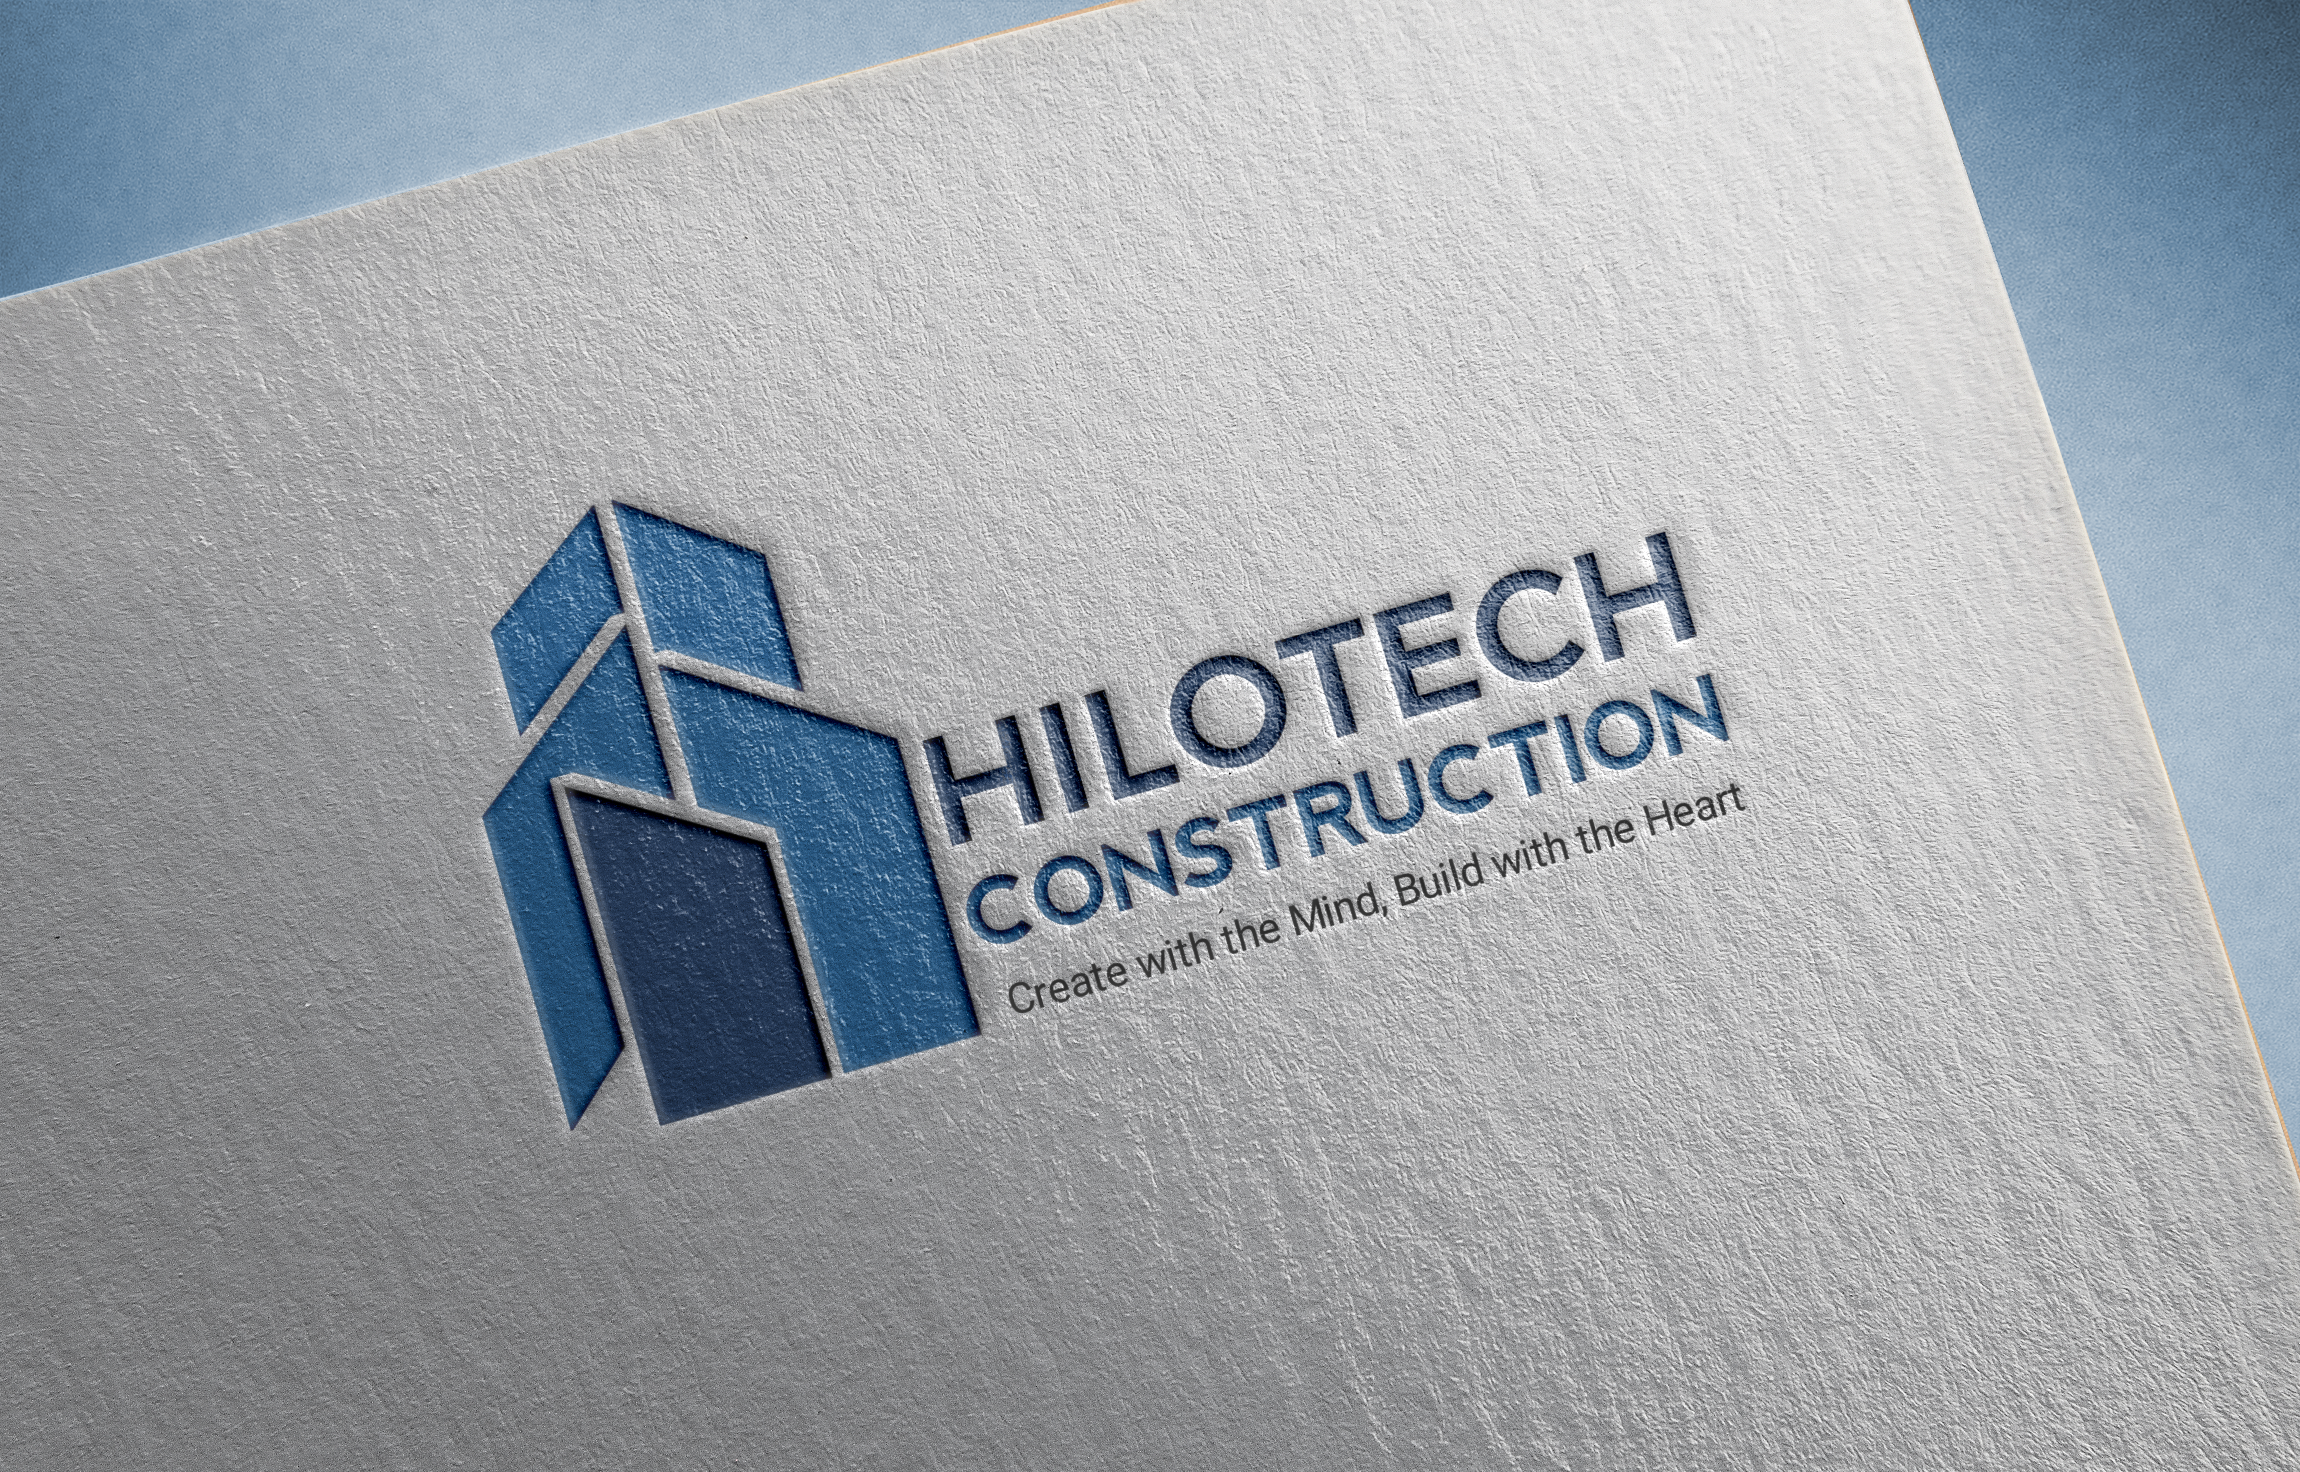 Hilotech Construction